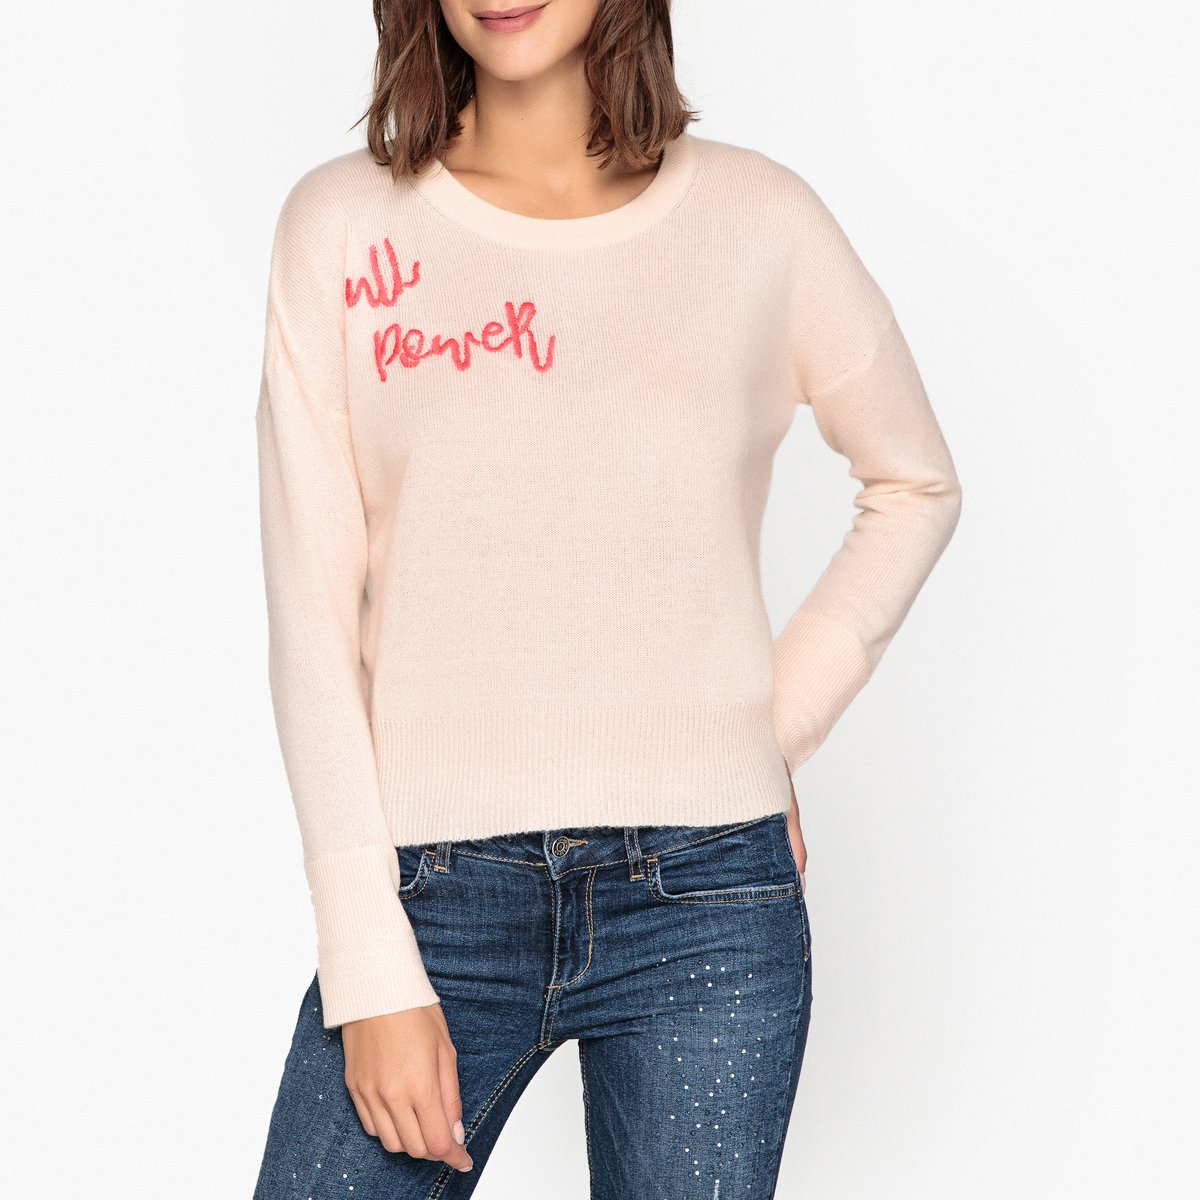 пуловер из кашемира aaron s розовый Пуловер из кашемира AARON S розовый